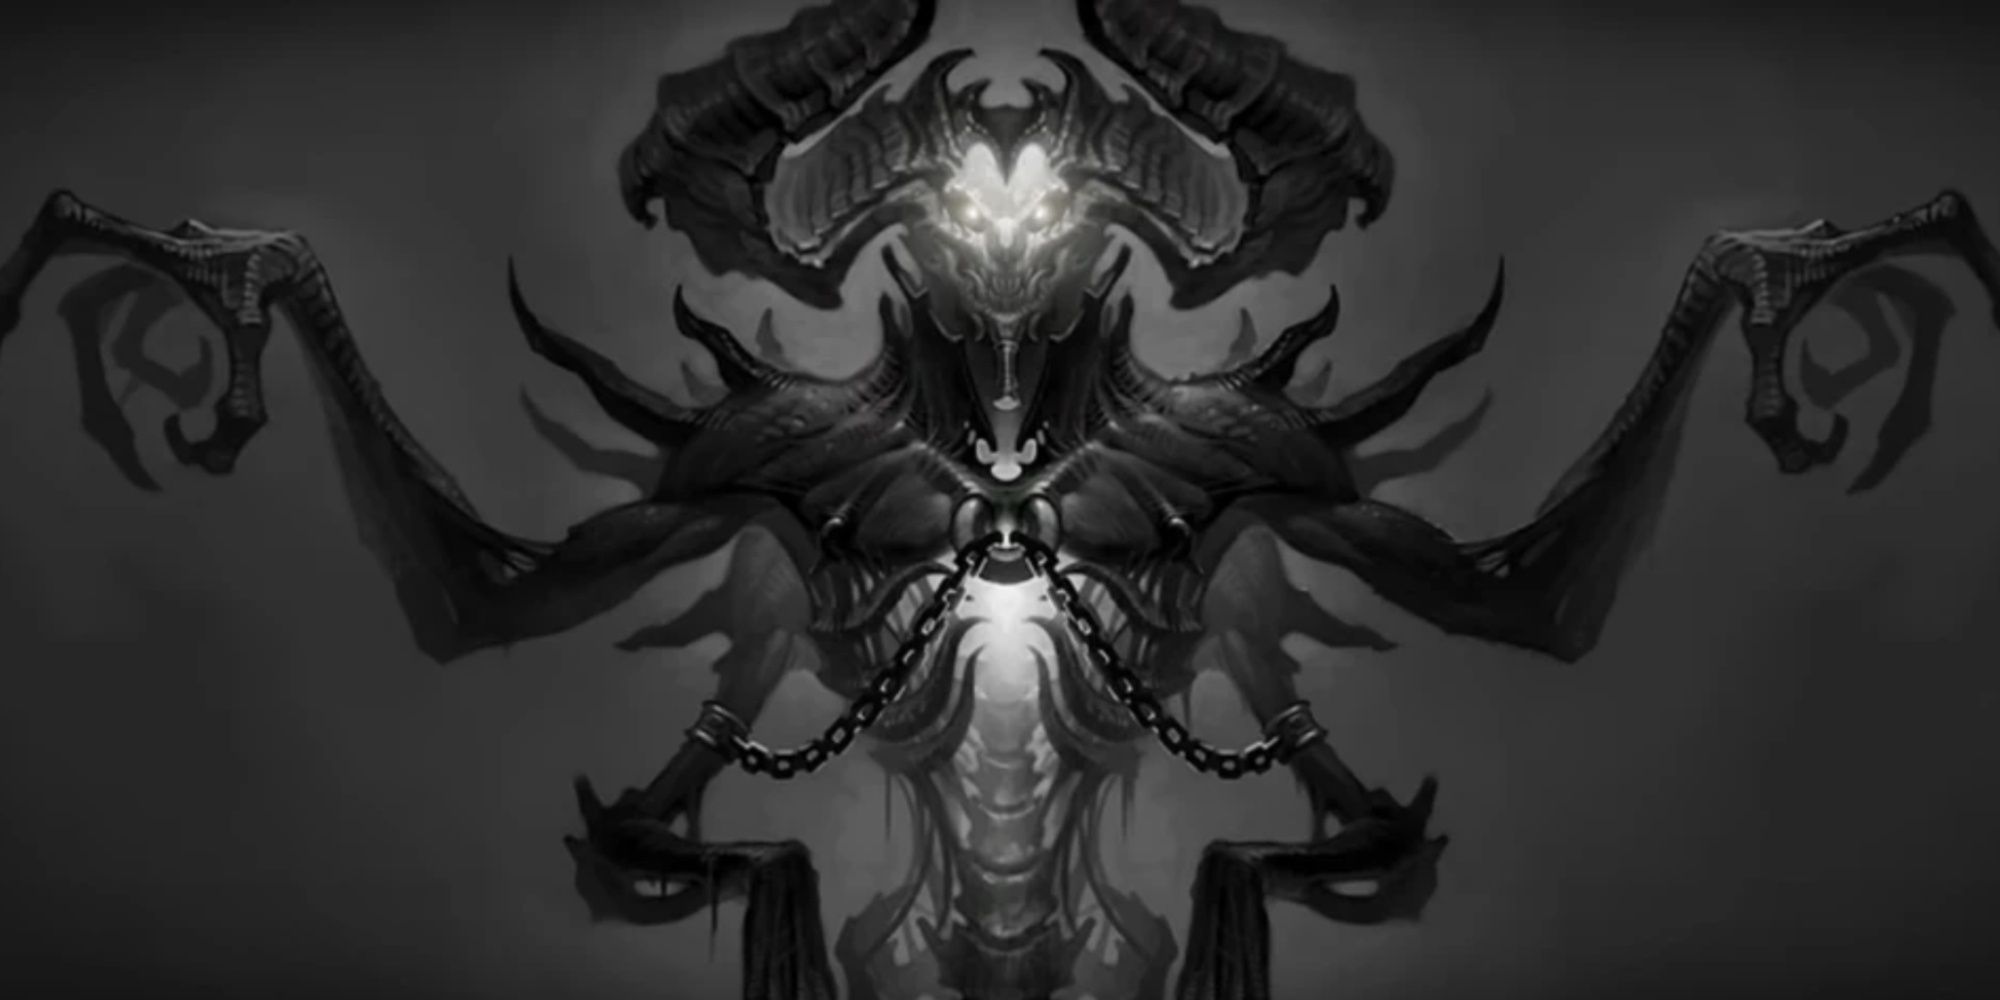 Mephisto diablo 4 black and white cropped